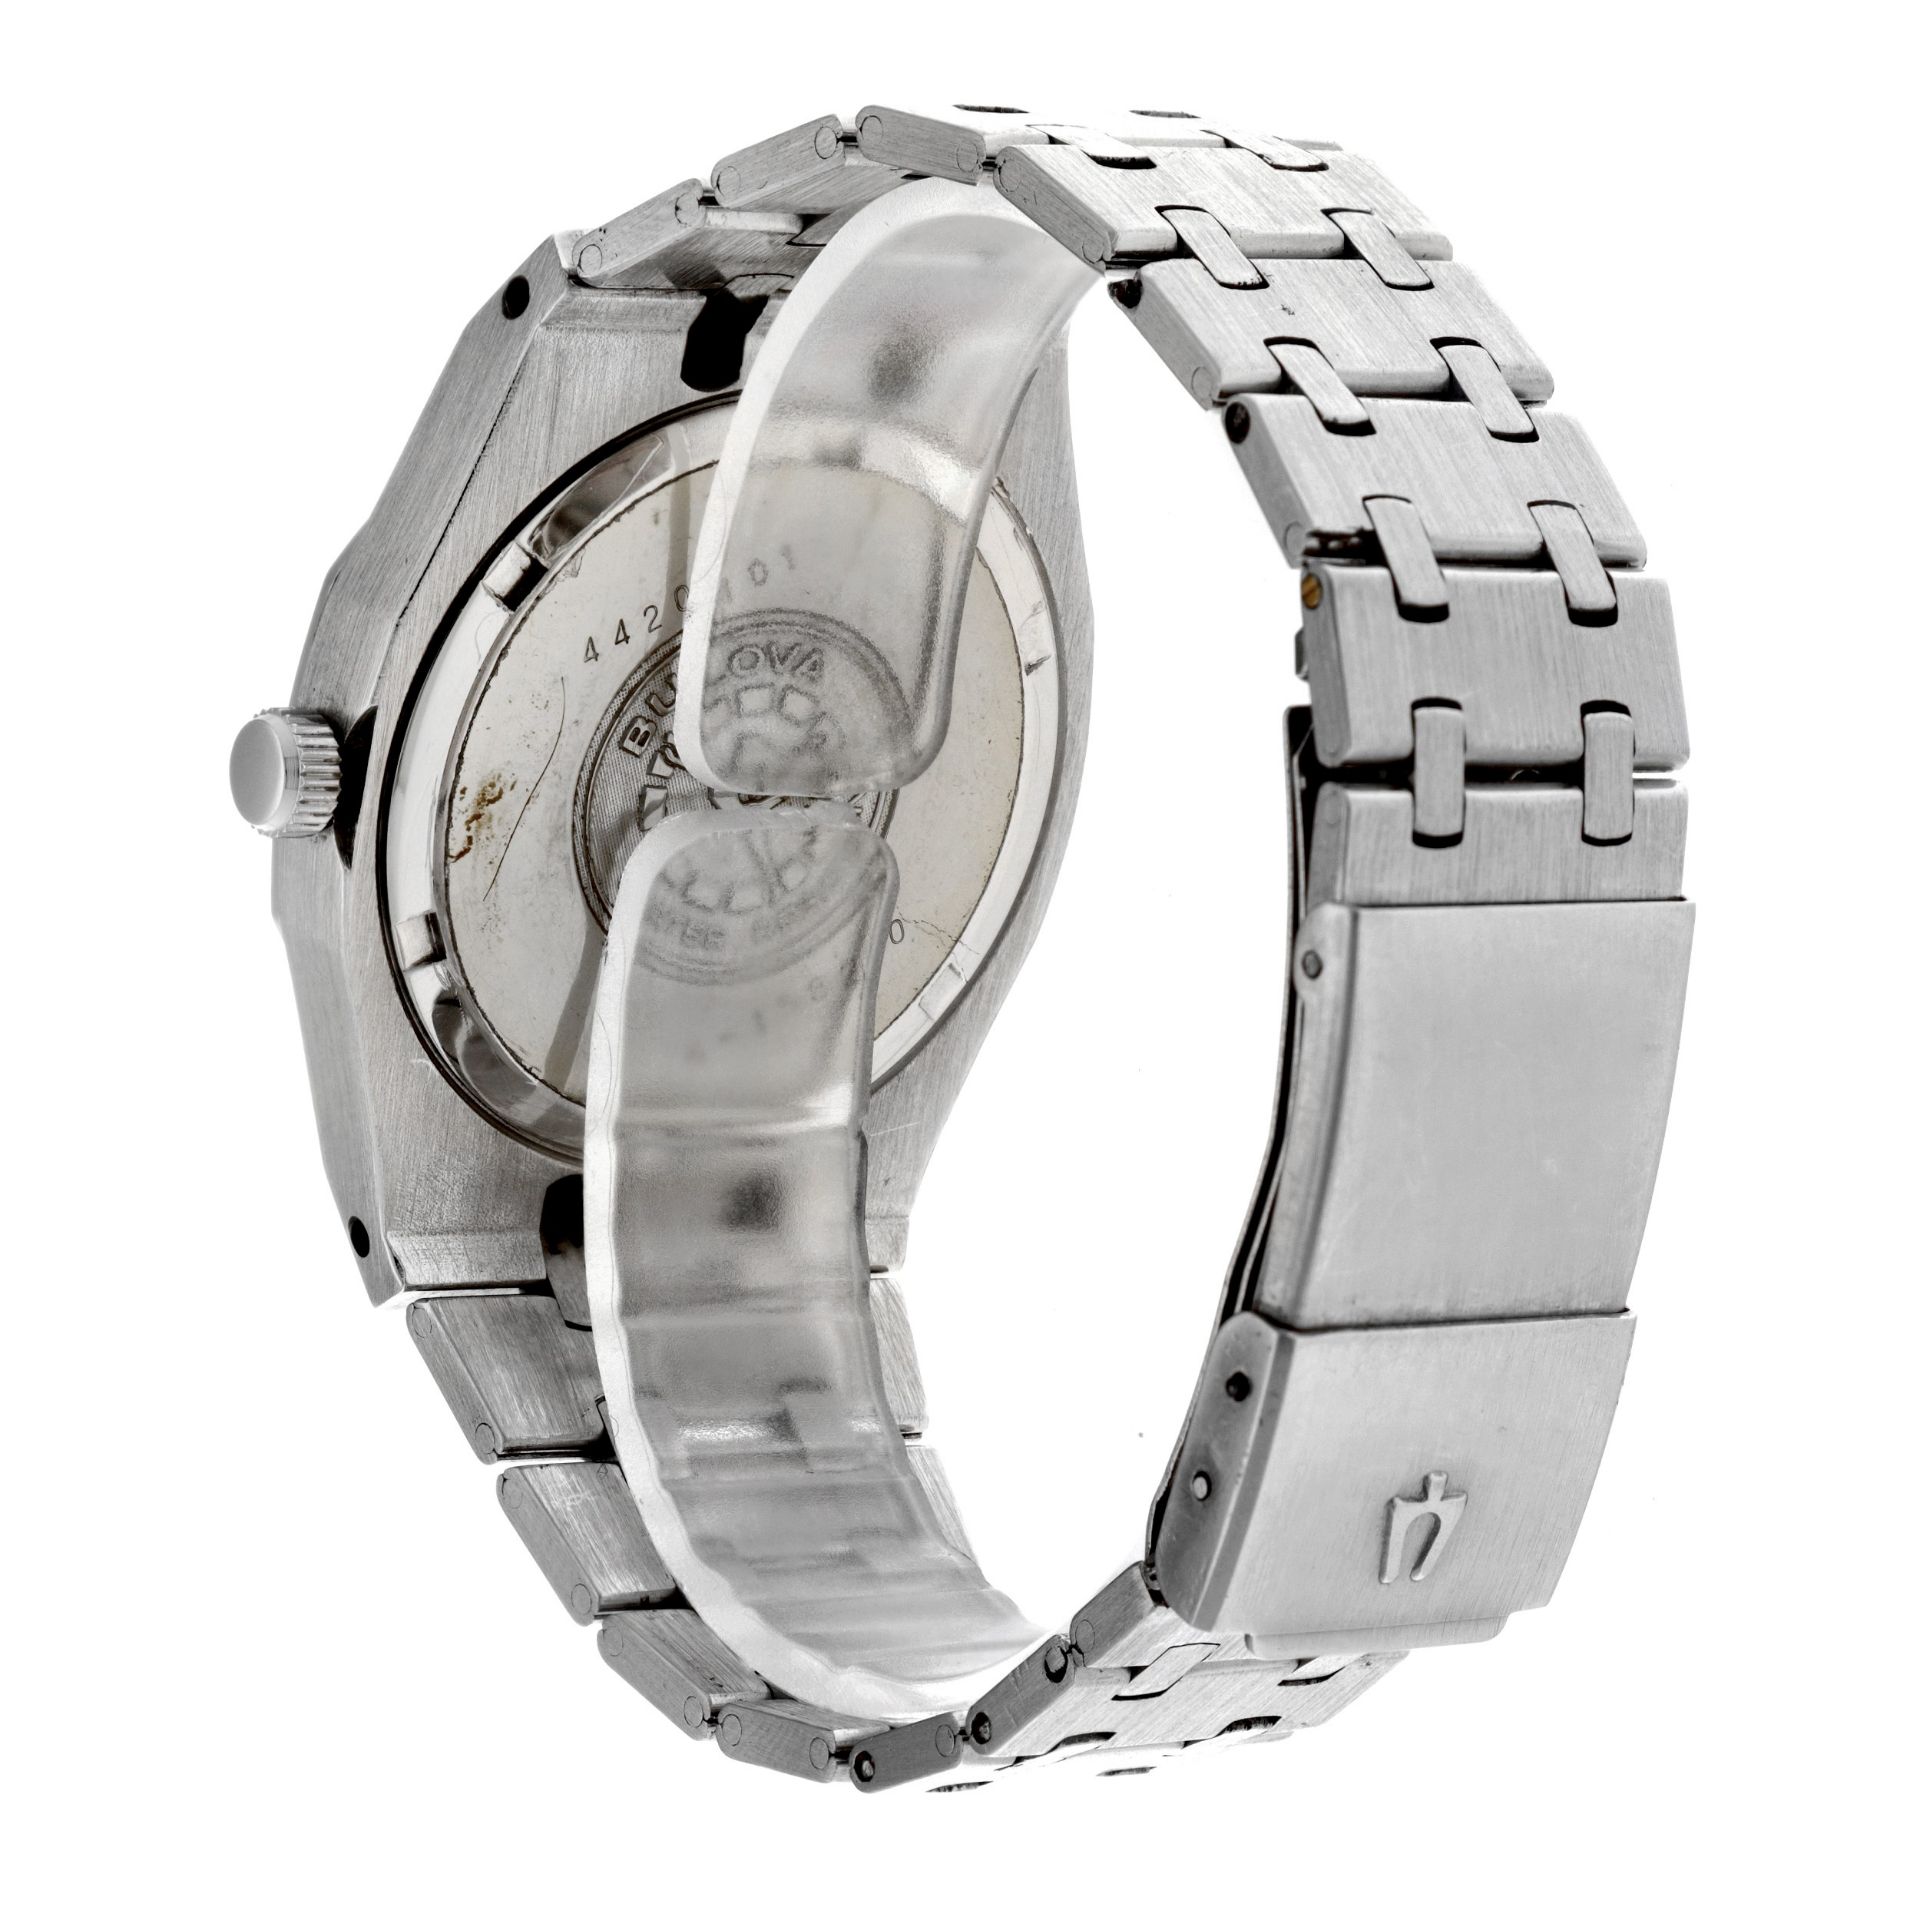 No Reserve - Bulova "Royal Oak" 4420101 - Men's watch. - Image 3 of 5